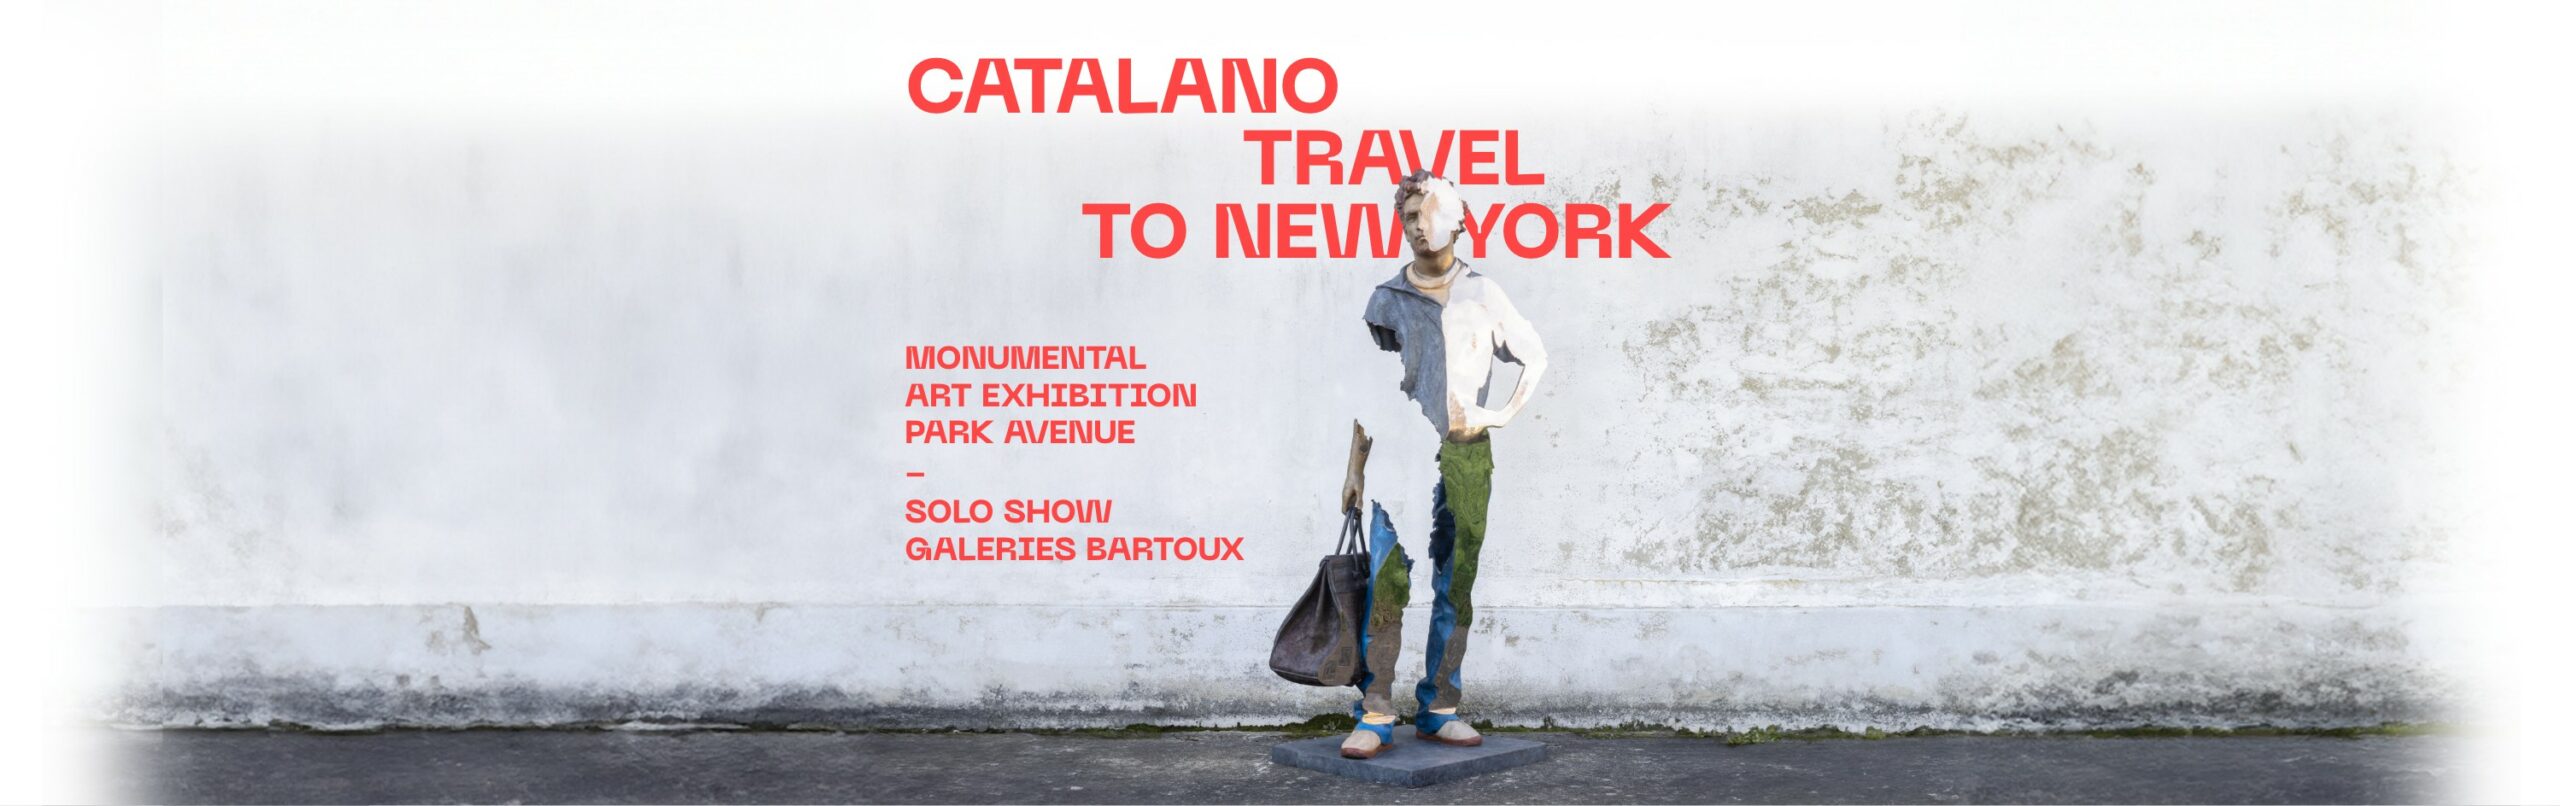 BRUNO CATALANO – TRAVEL TO NEW YORK - Galeries Bartoux